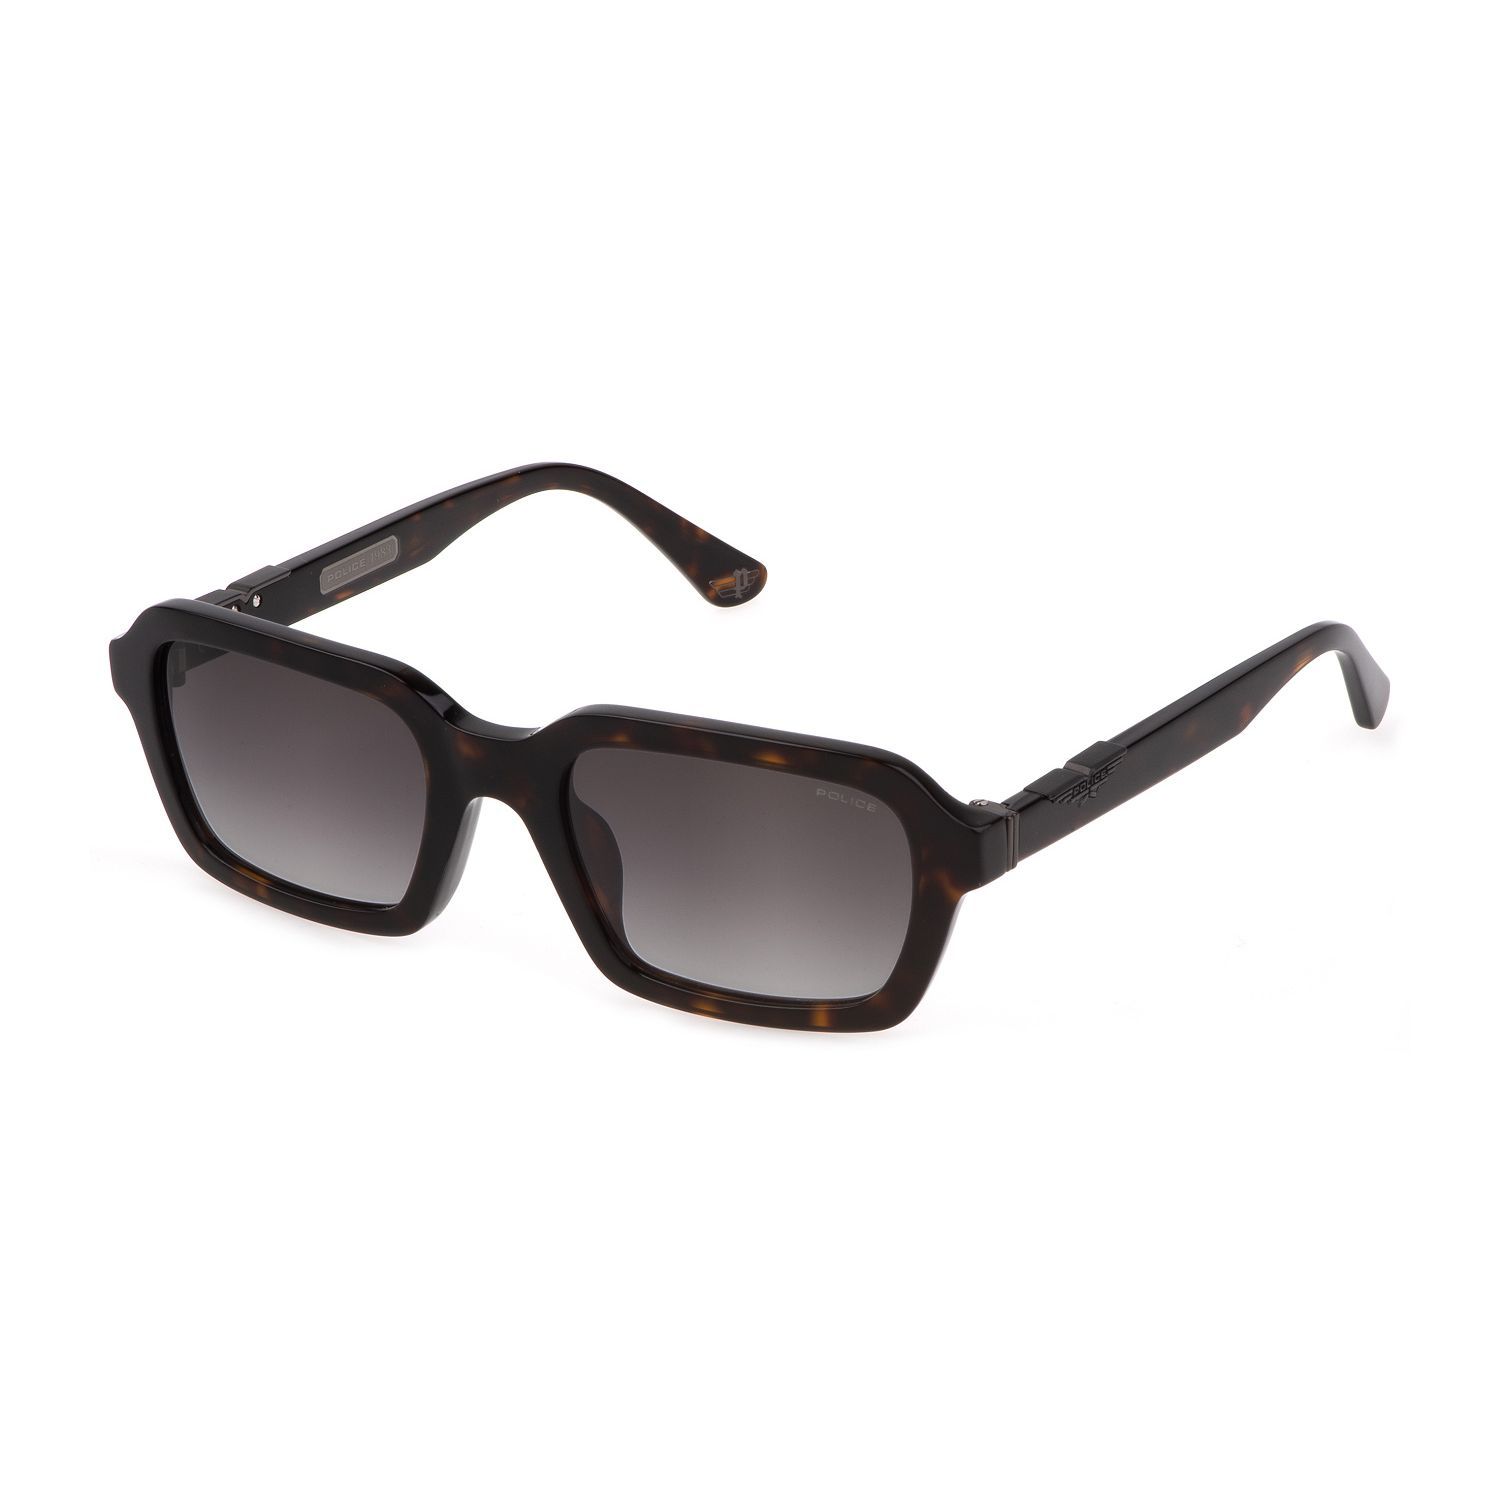 SPLL14M Rectangle Sunglasses 722 - size 53